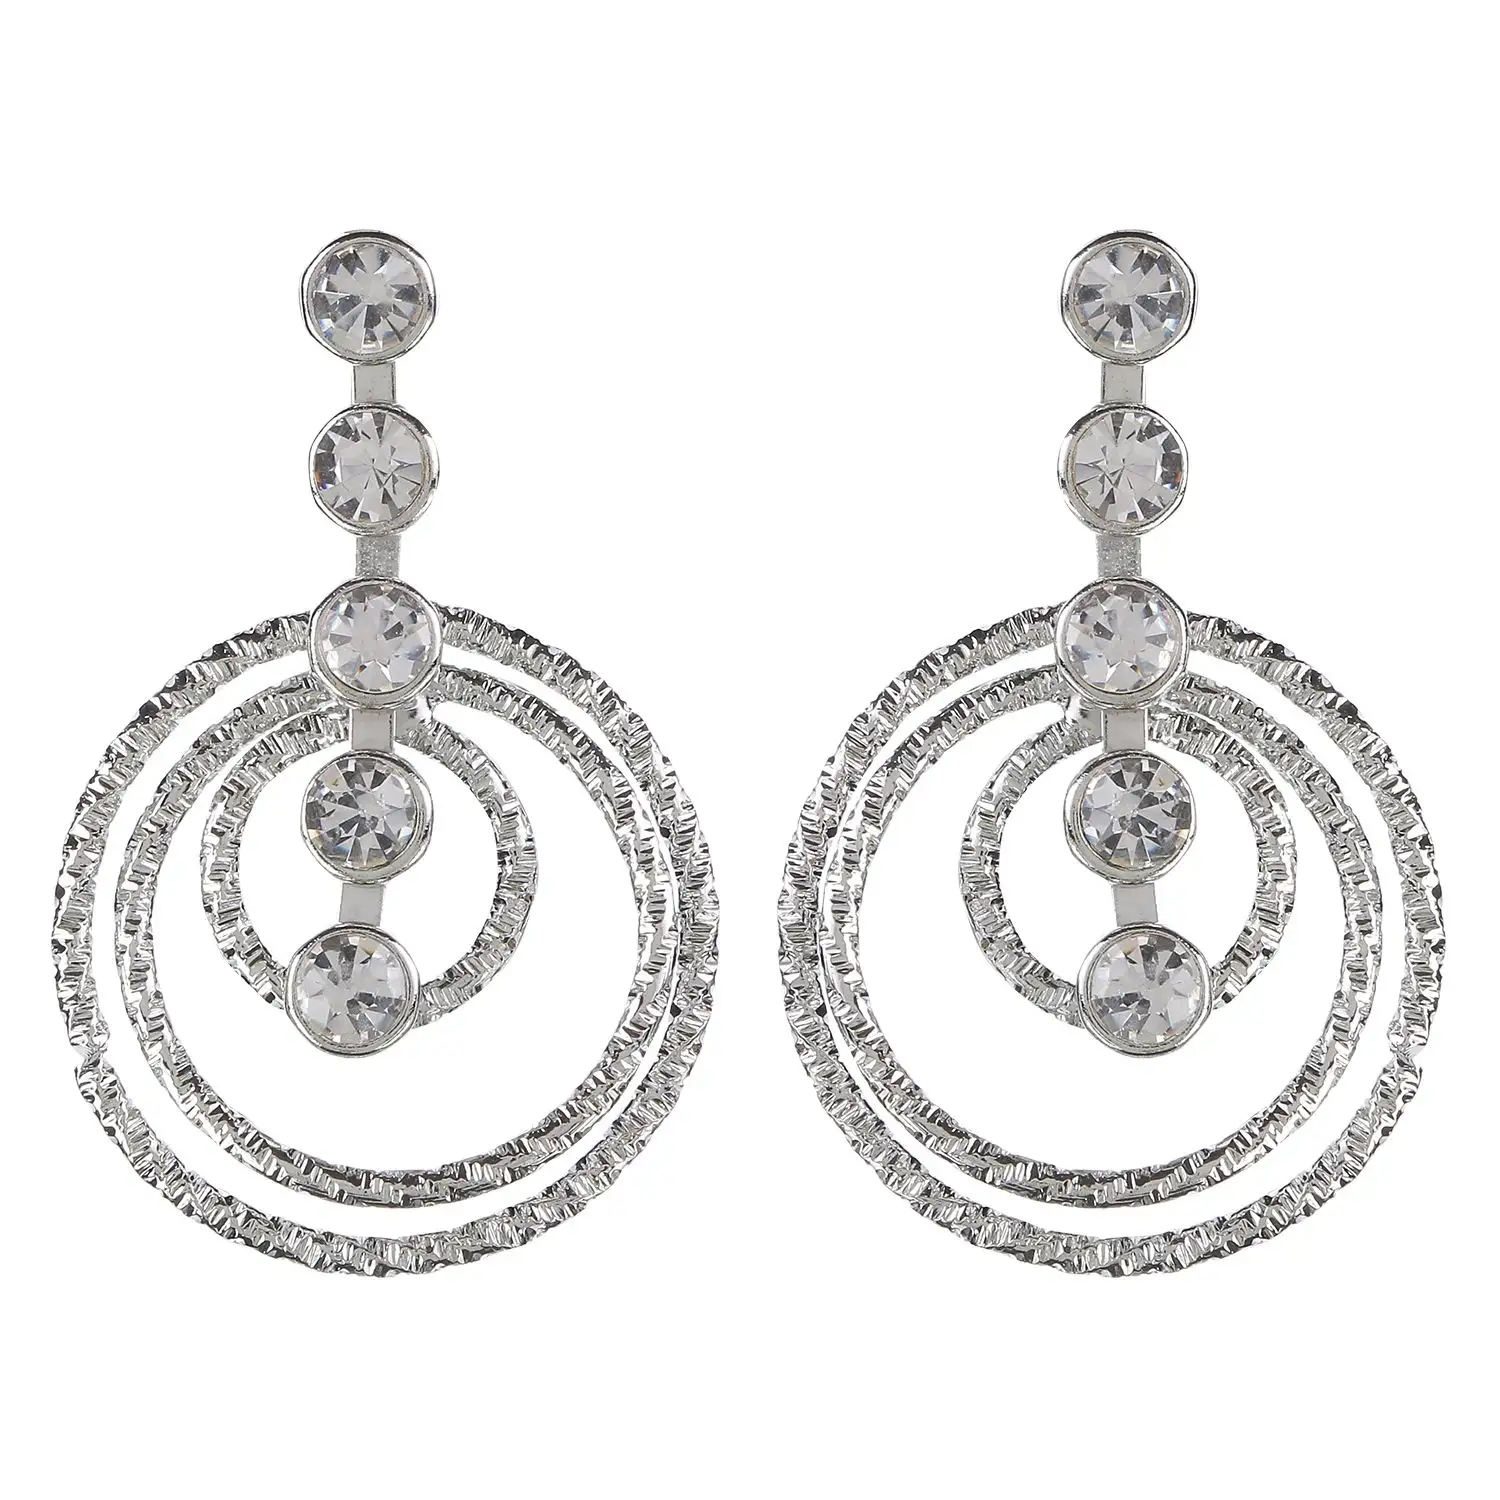 Indian Wholesale Jewelry Oxidized Boho Vintage Crystal Jewellery Dangle Earrings Set Indian Jewelry Manufacturers